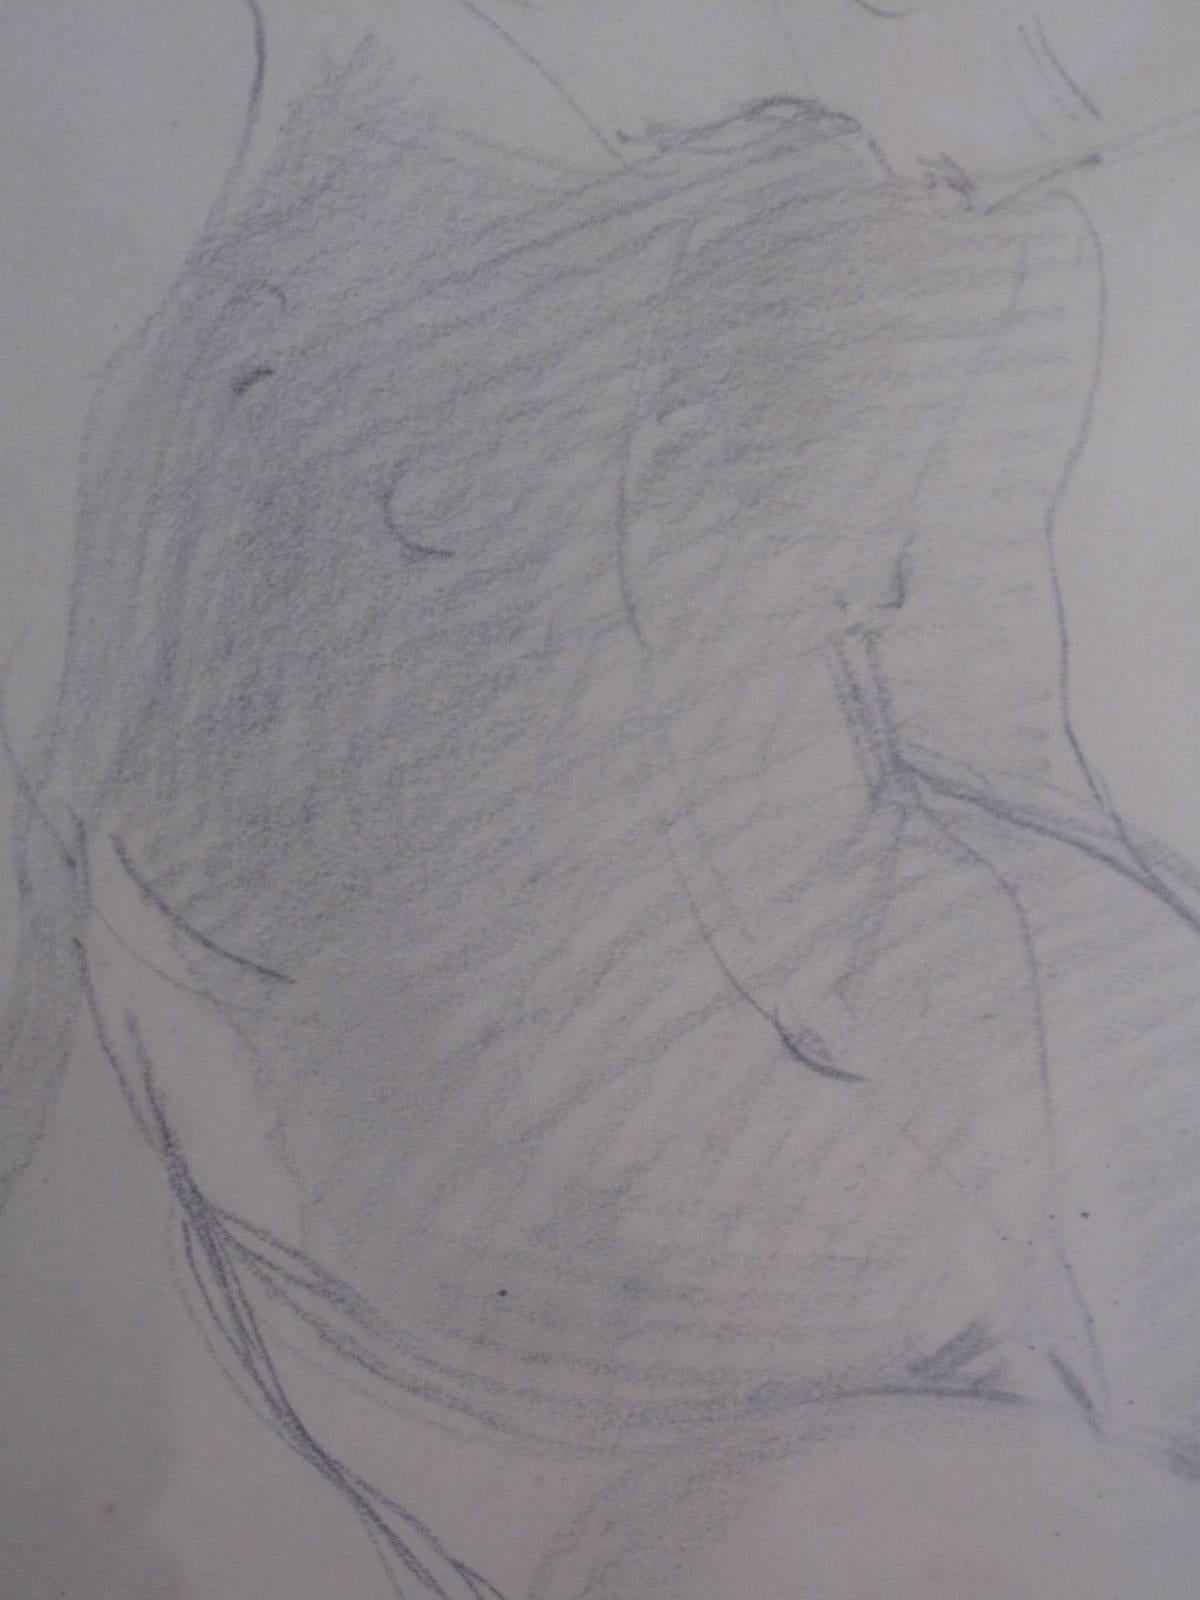 Seated Nude Pencil Sketch 1